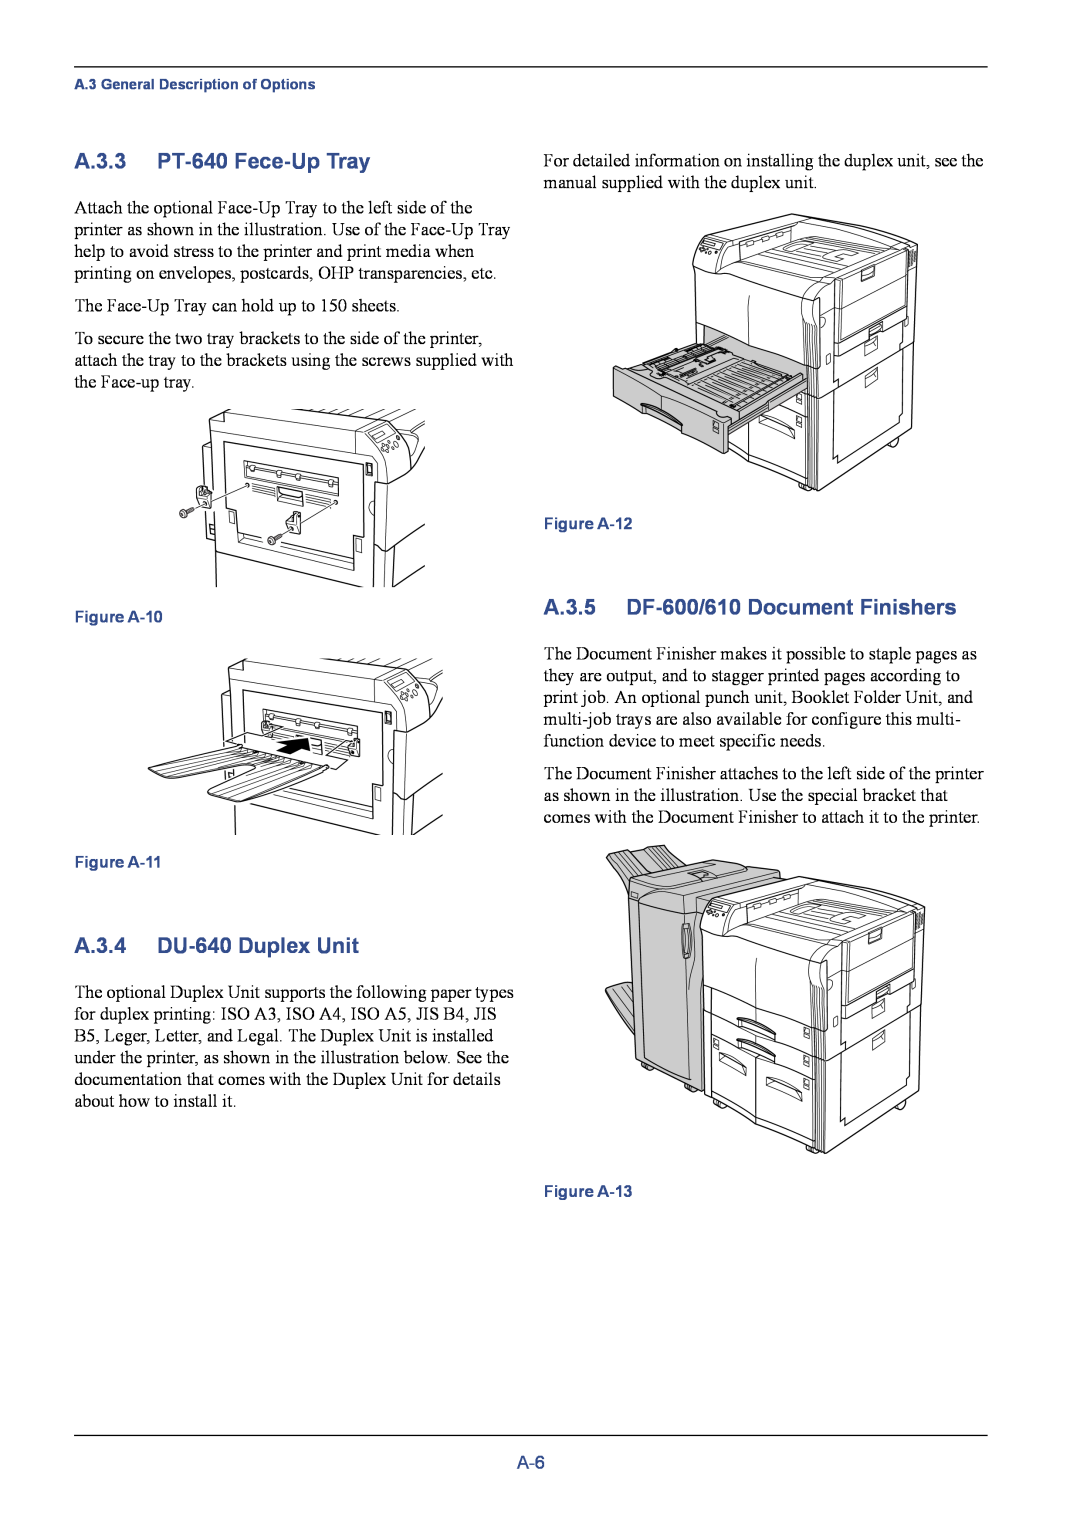 Kyocera C8026N manual A.3.3 PT-640 Fece-Up Tray, A.3.5 DF-600/610 Document Finishers, A.3.4 DU-640 Duplex Unit 